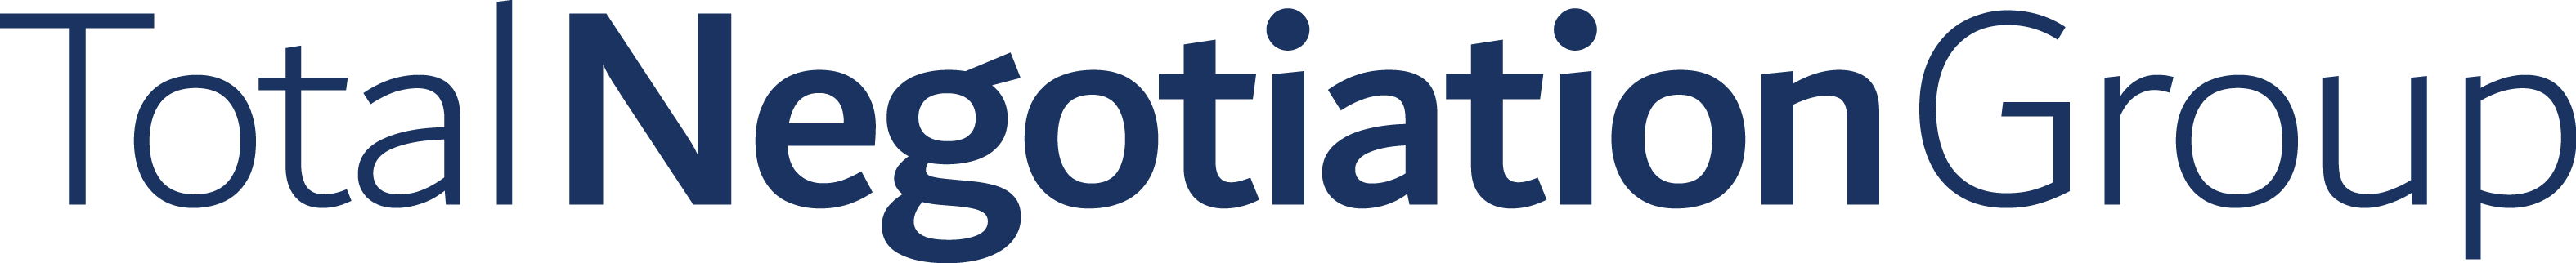 Total-Negotiation-Group-logo_blue_23